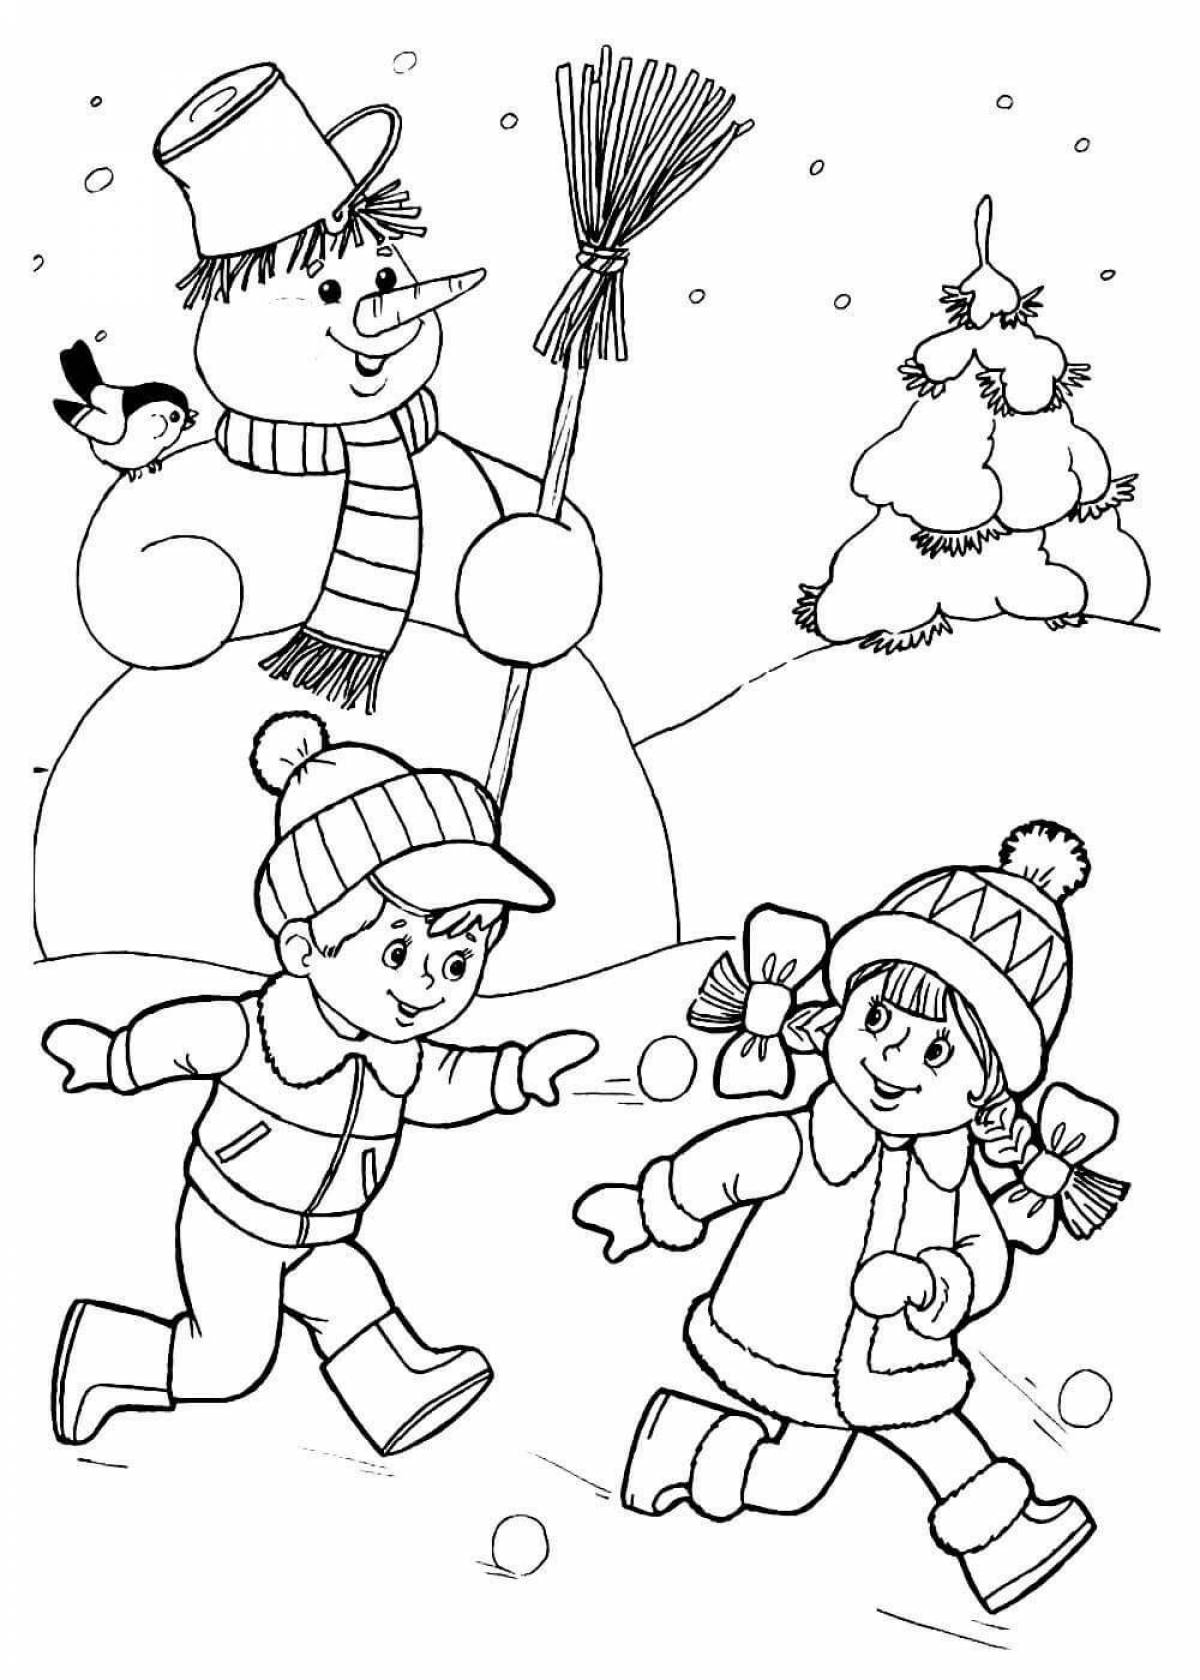 Shiny winter fun coloring book